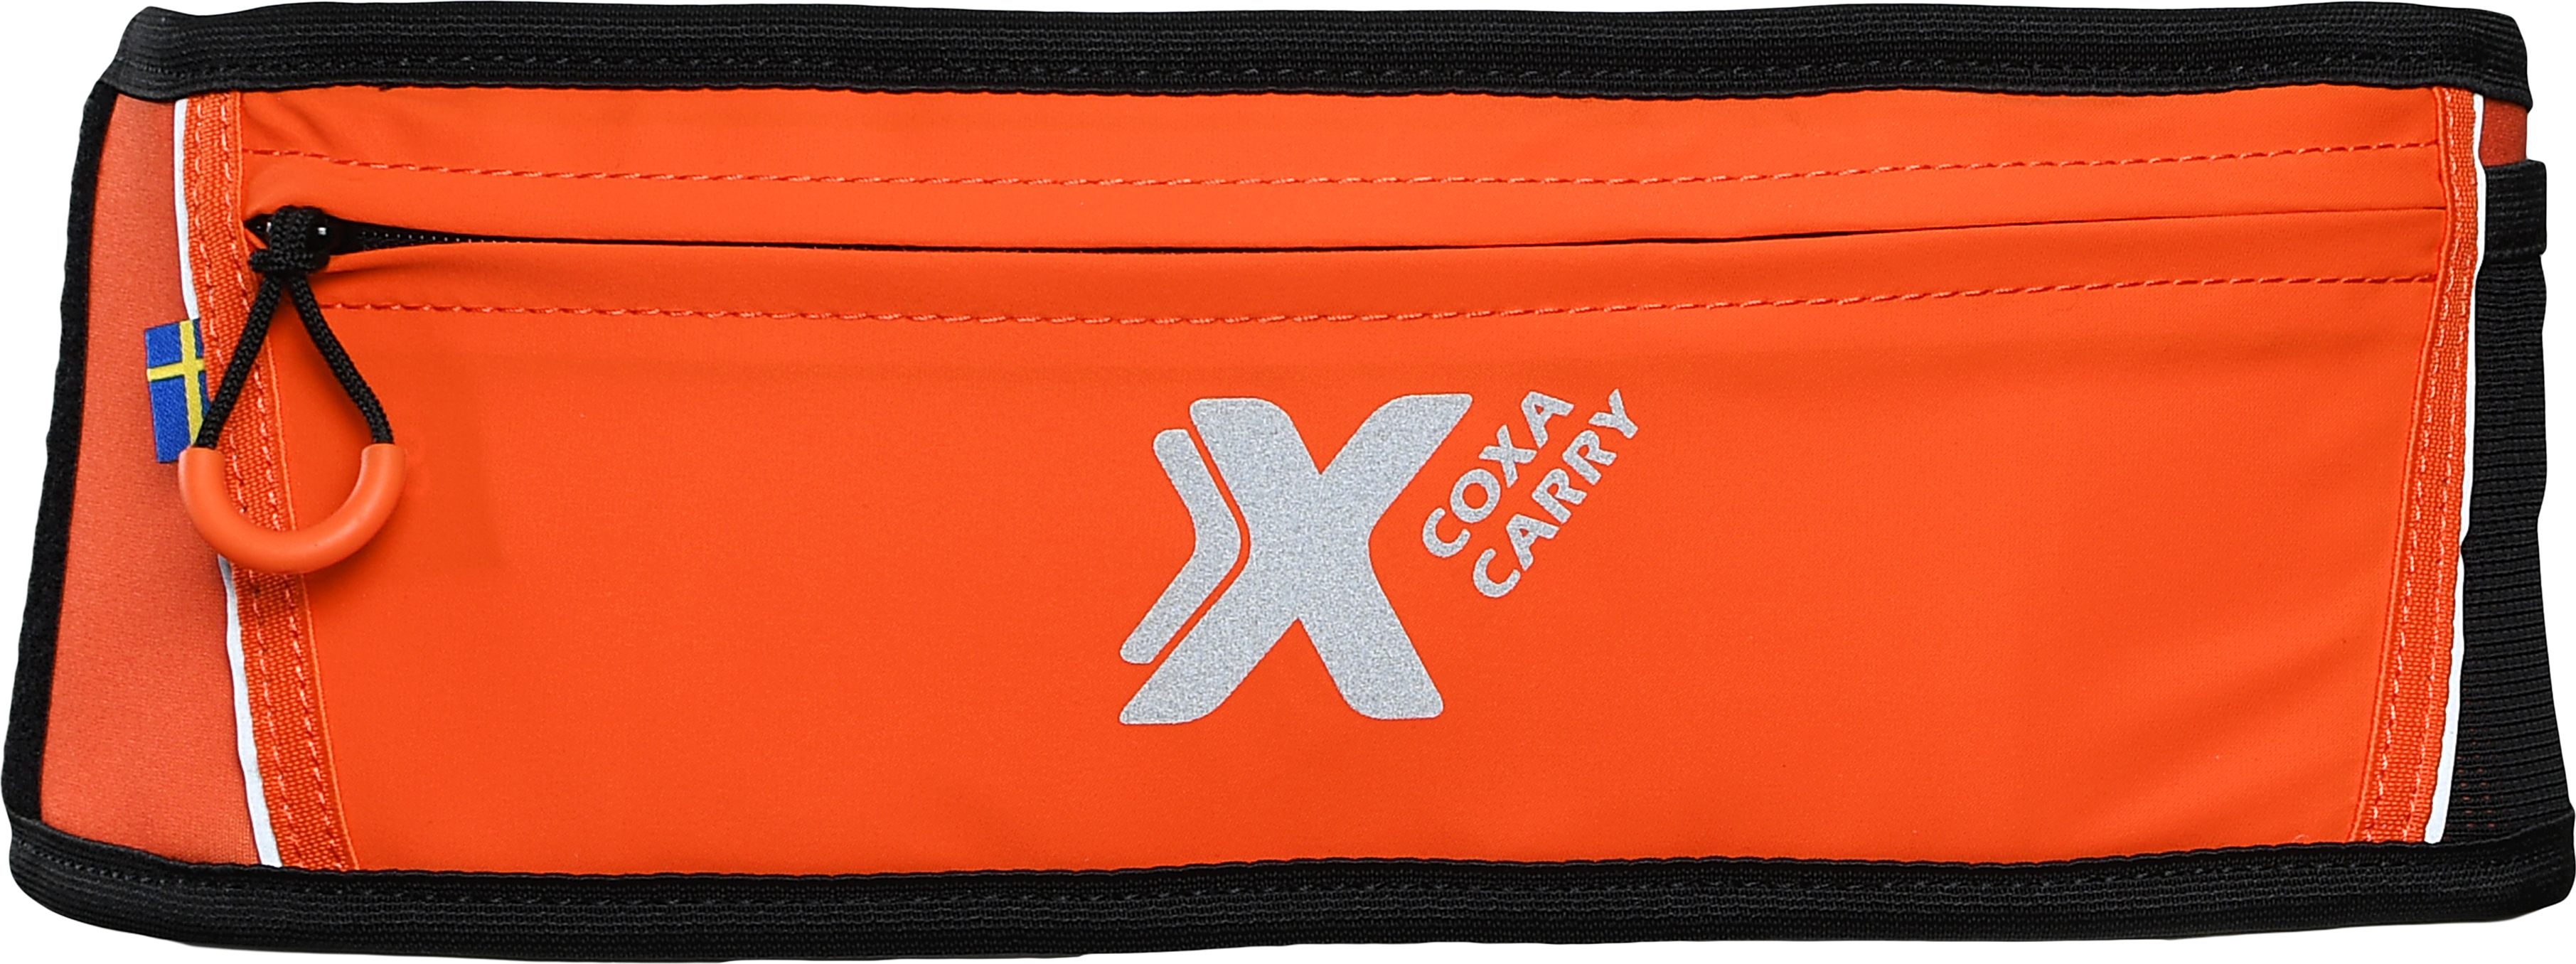 Coxa Carry Coxa Running Belt Orange OneSize, Orange